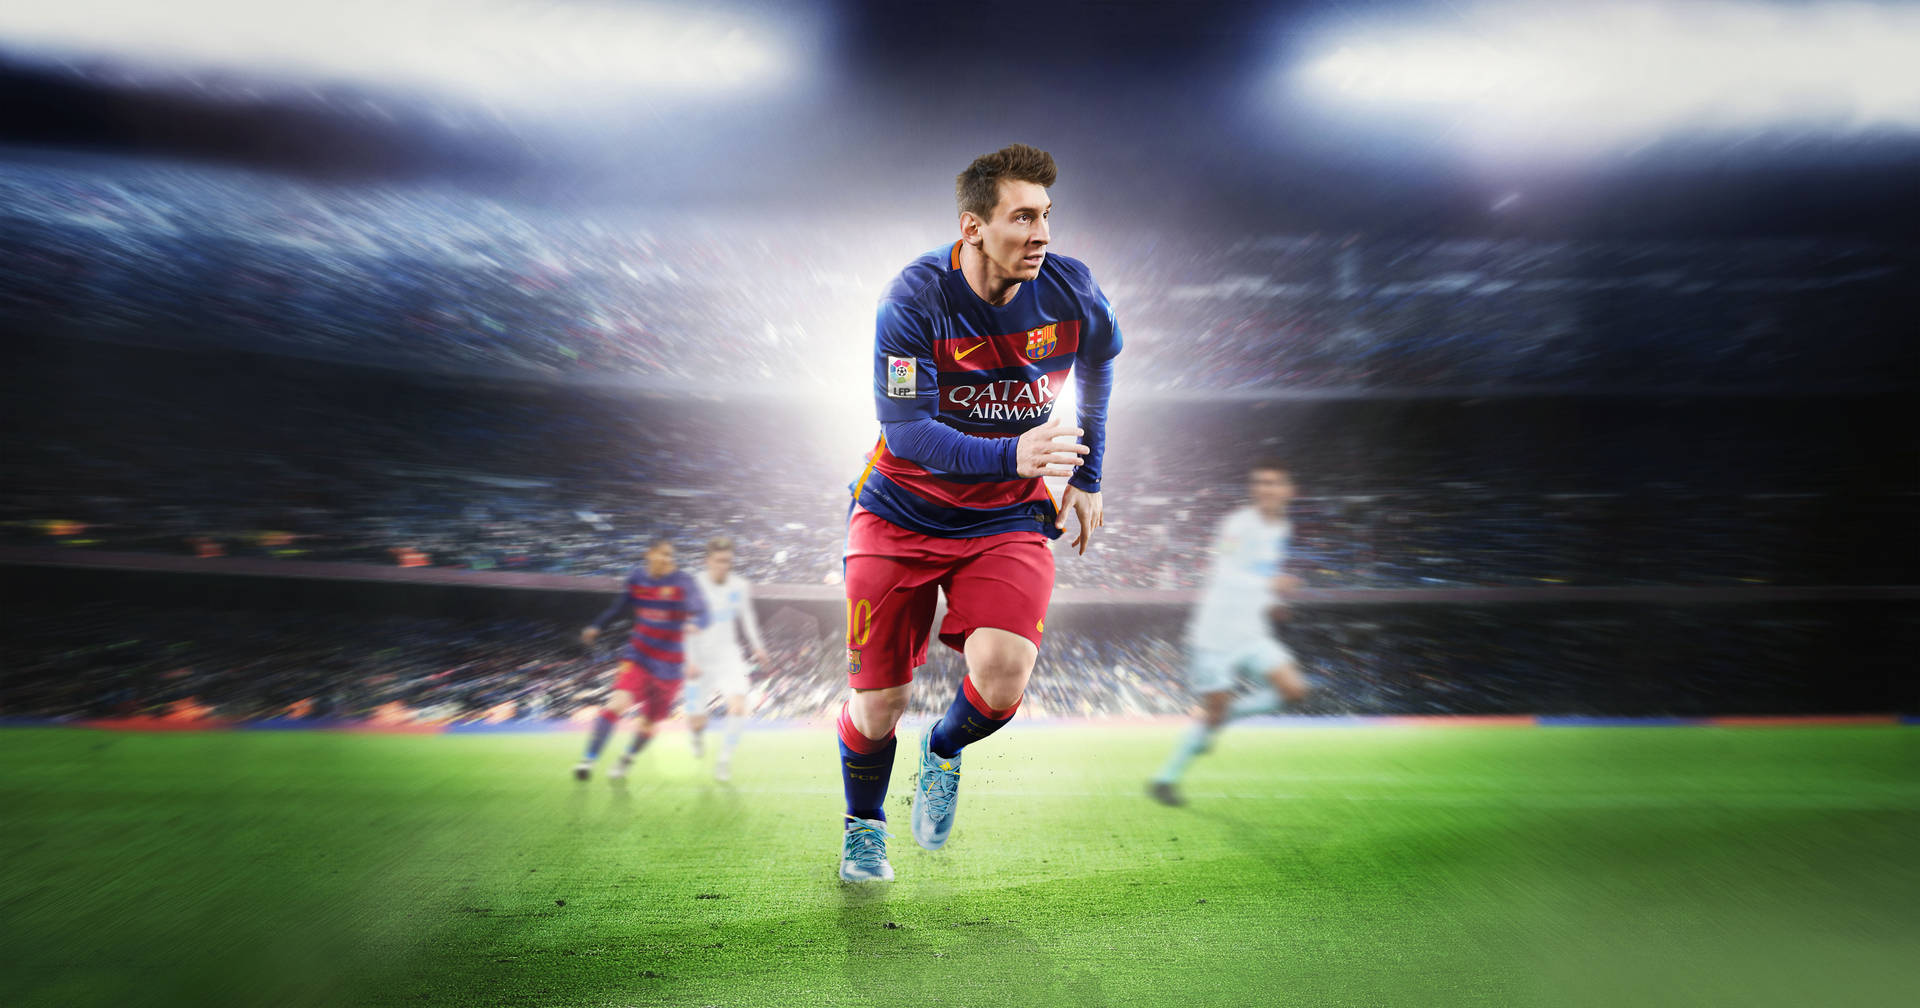 Free Messi 4k Ultra Hd Wallpaper Downloads, [100+] Messi 4k Ultra Hd  Wallpapers for FREE 